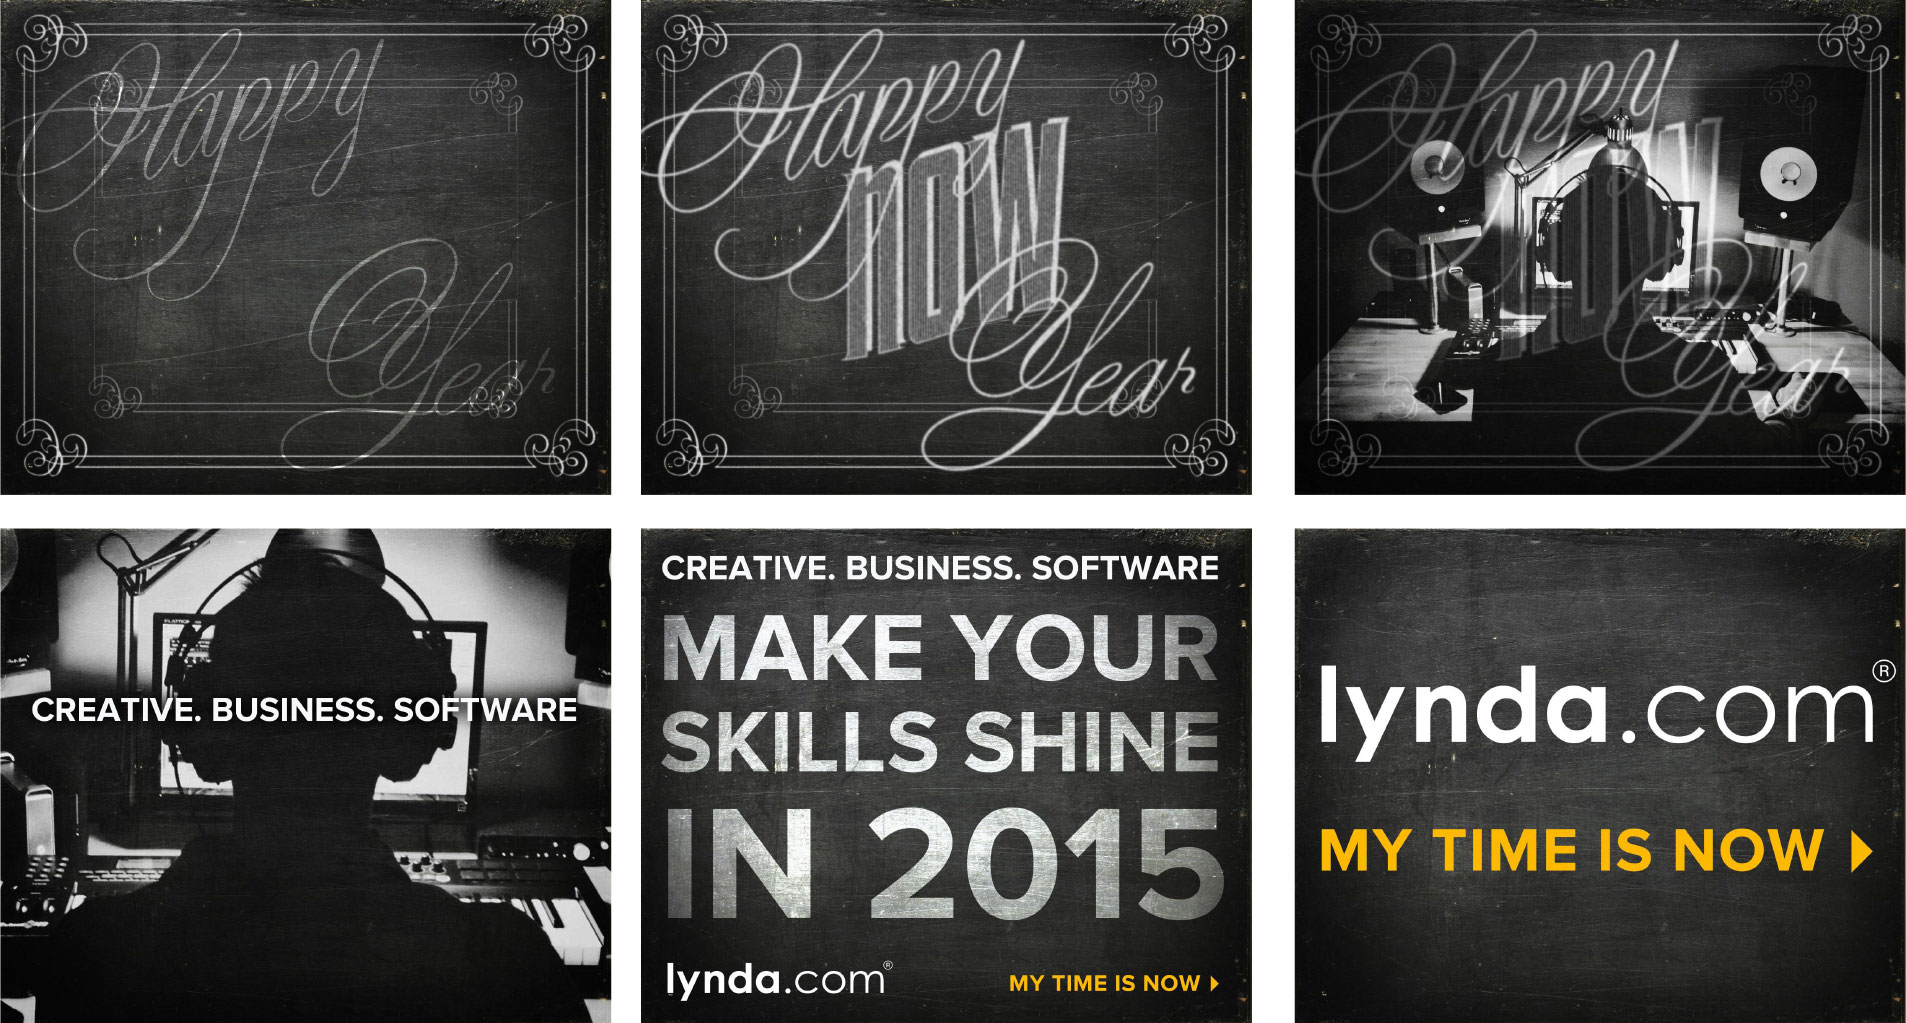 Ad Banners: Lynda - "Happy 'Now' Year